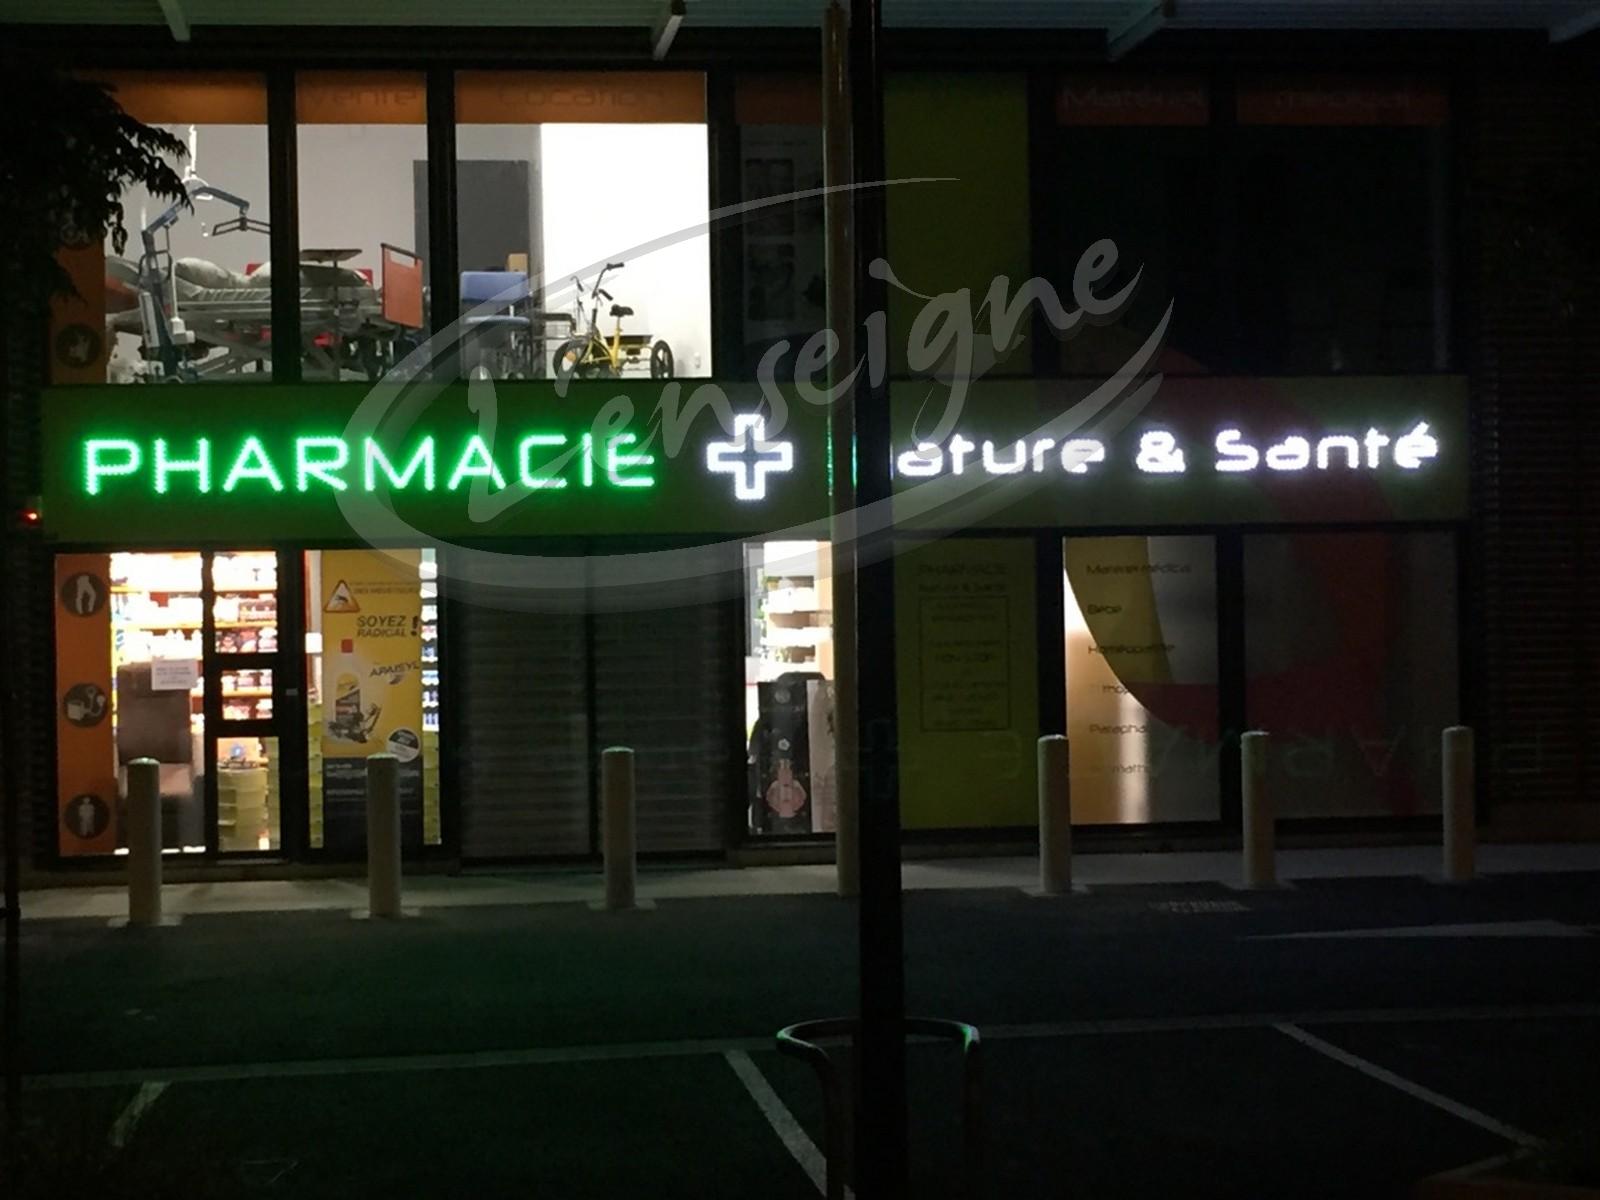 Façade de Pharmacie visible de nuit signalétique lumineuse par diodes Martigues